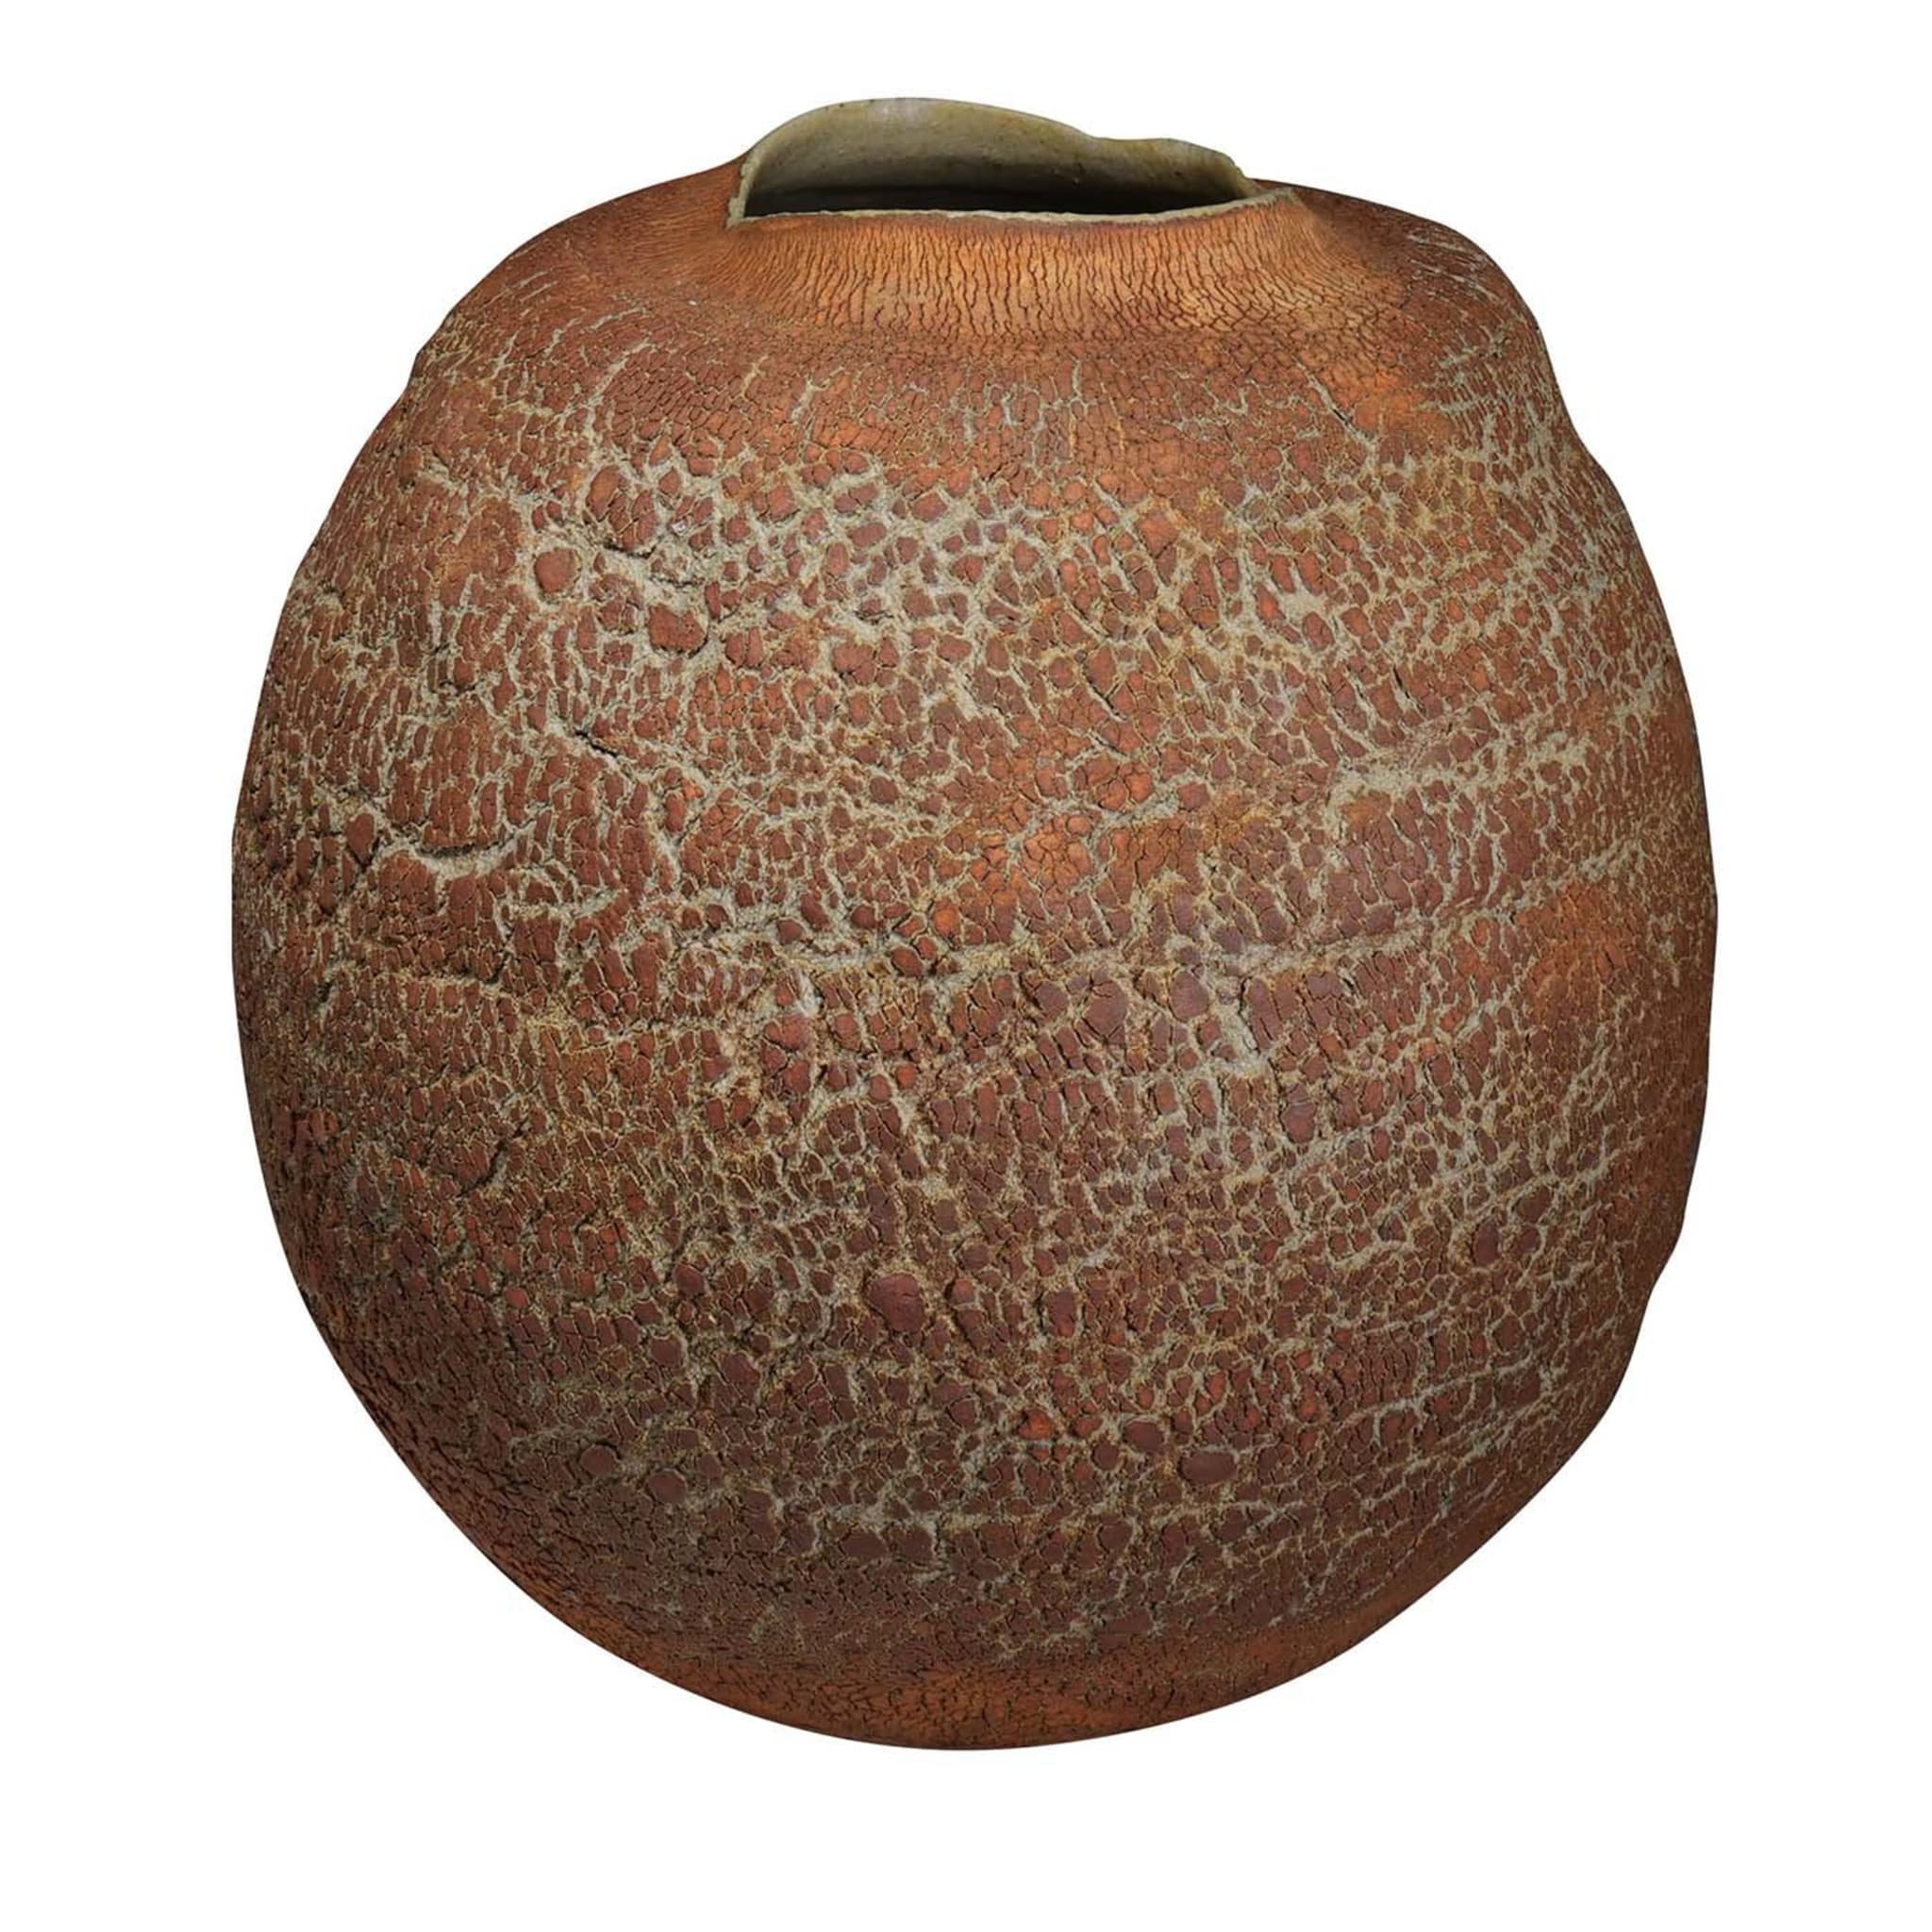 Toscana Earth Table Vase #2 - Main view